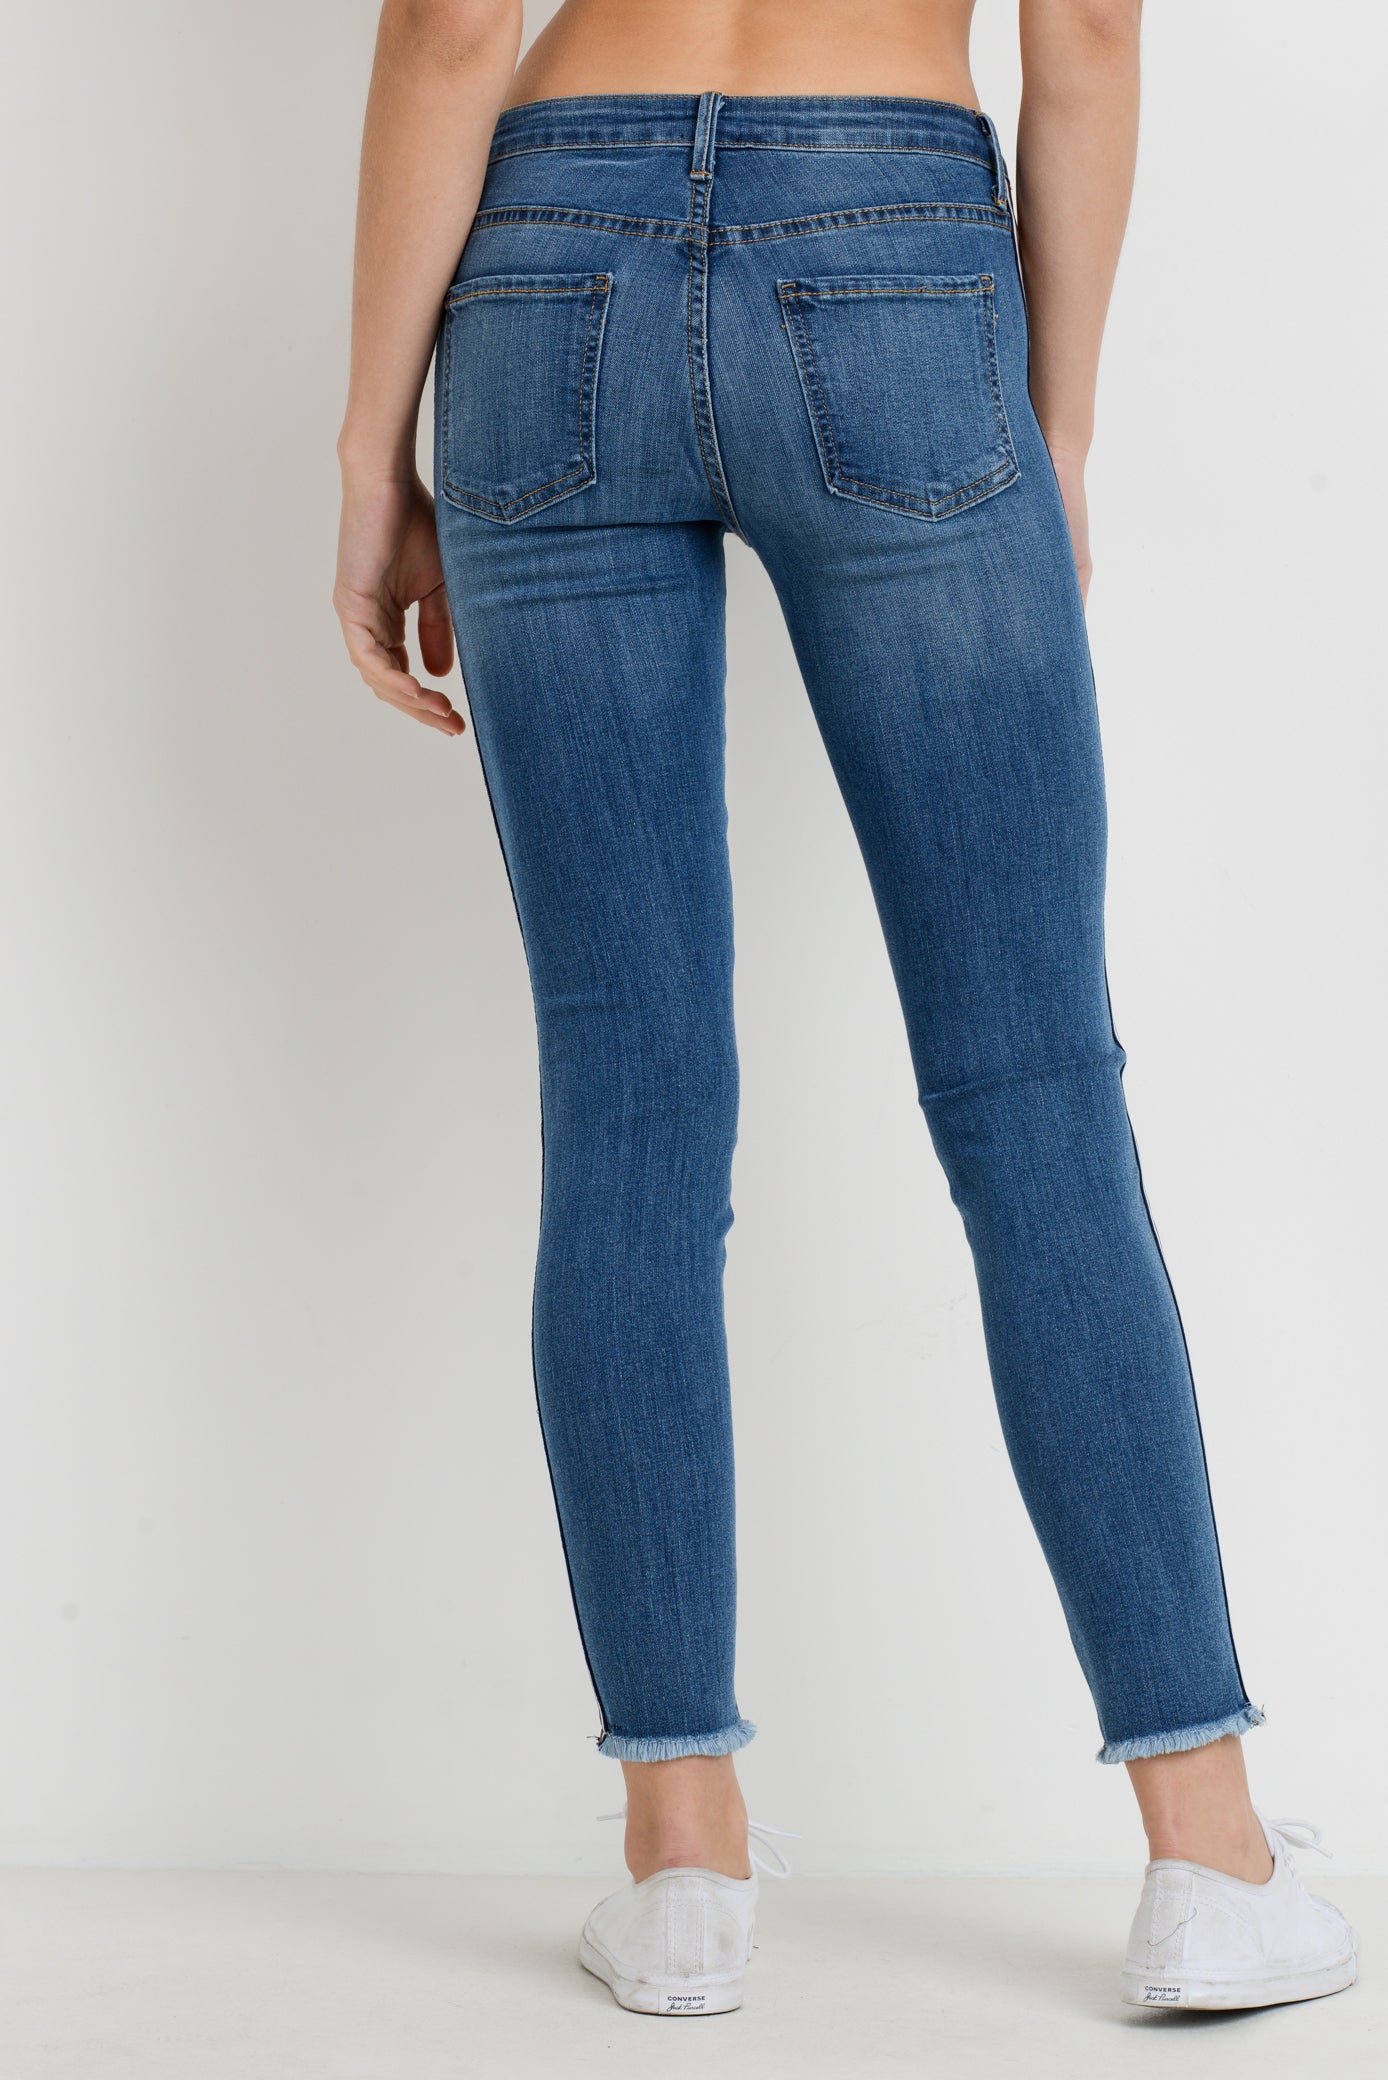 Skinny Stripe Jeans with Frayed Hem